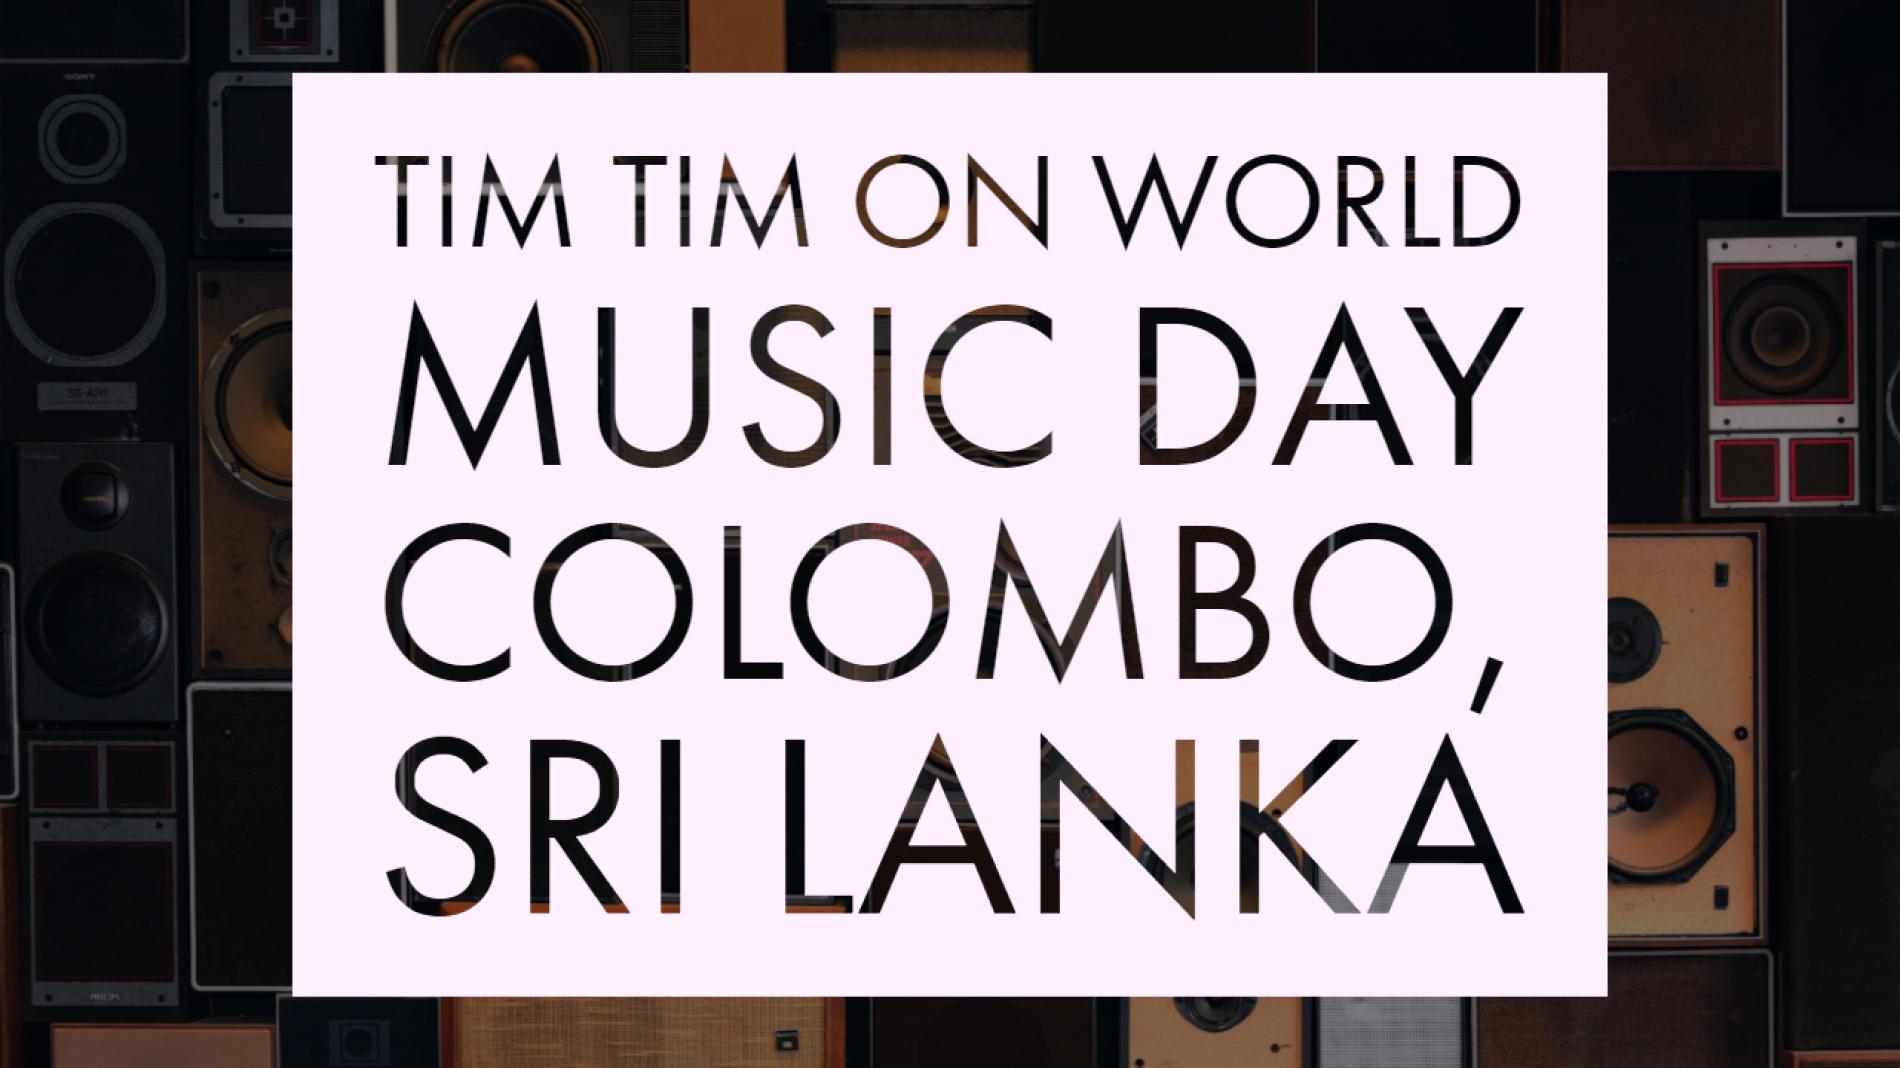 Tim Tim On World Music Day Colombo, Sri Lanka